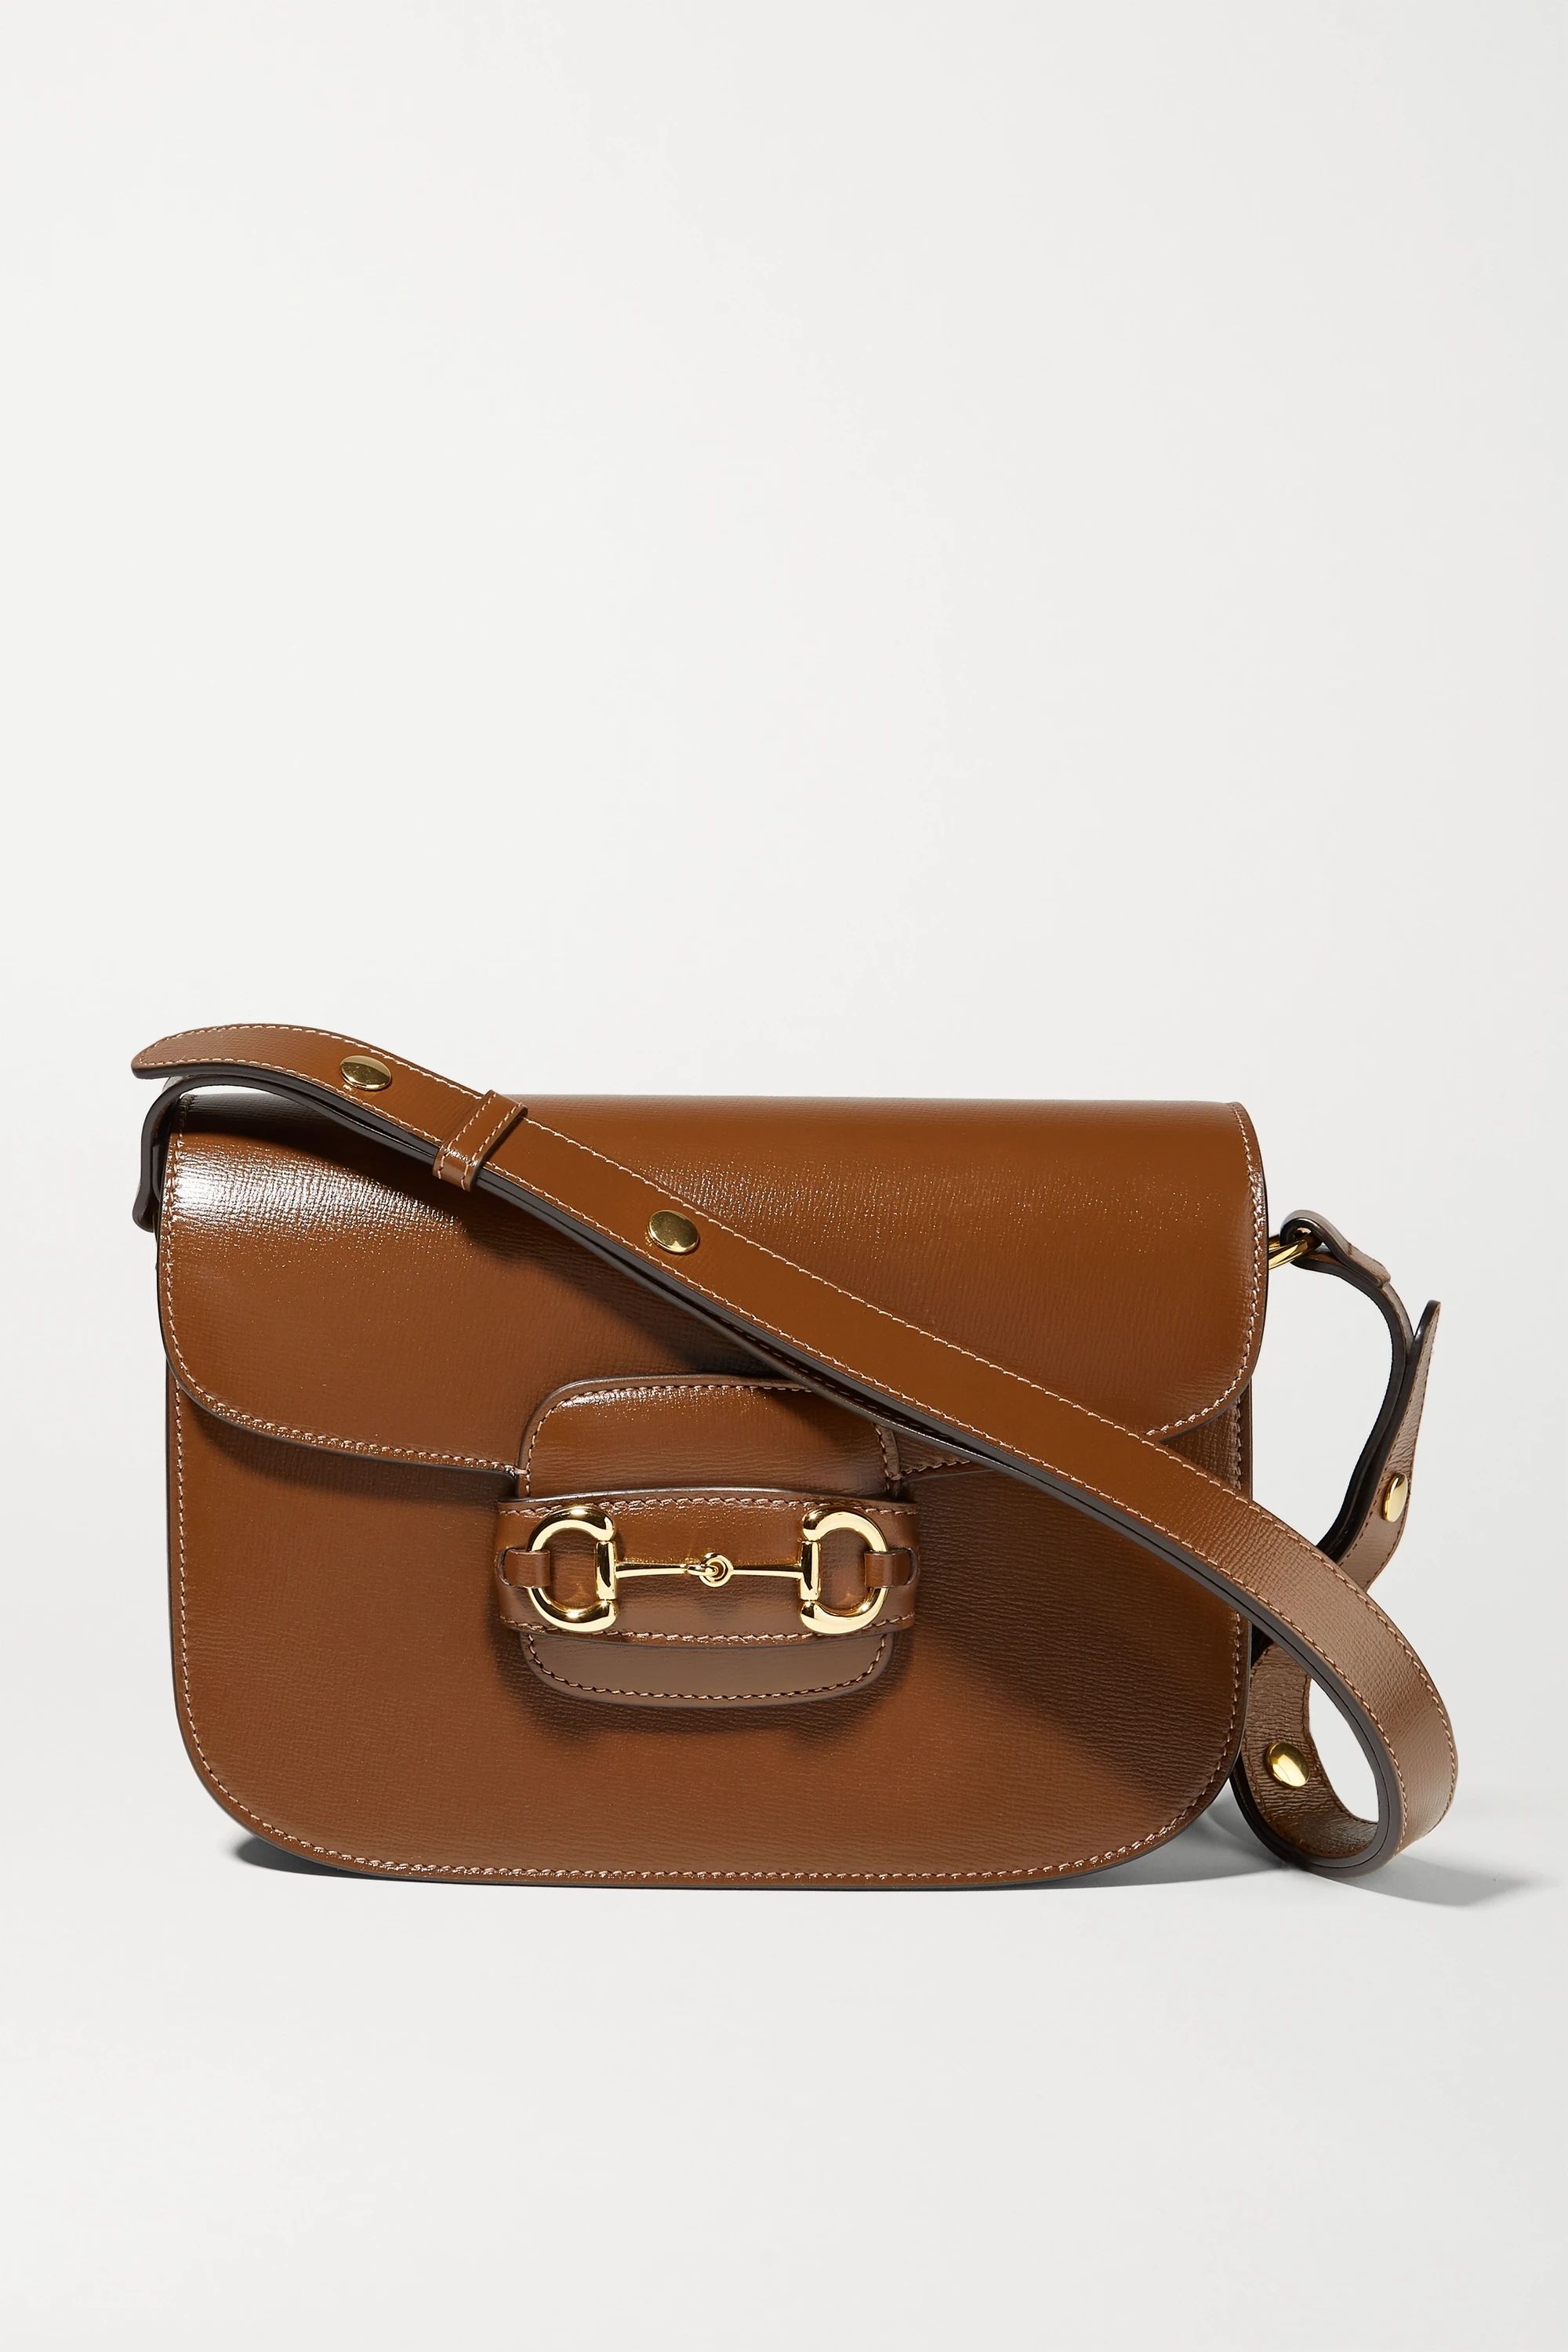 Chocolate 1955 horsebit-detailed leather shoulder bag | Gucci | NET-A-PORTER | NET-A-PORTER (UK & EU)